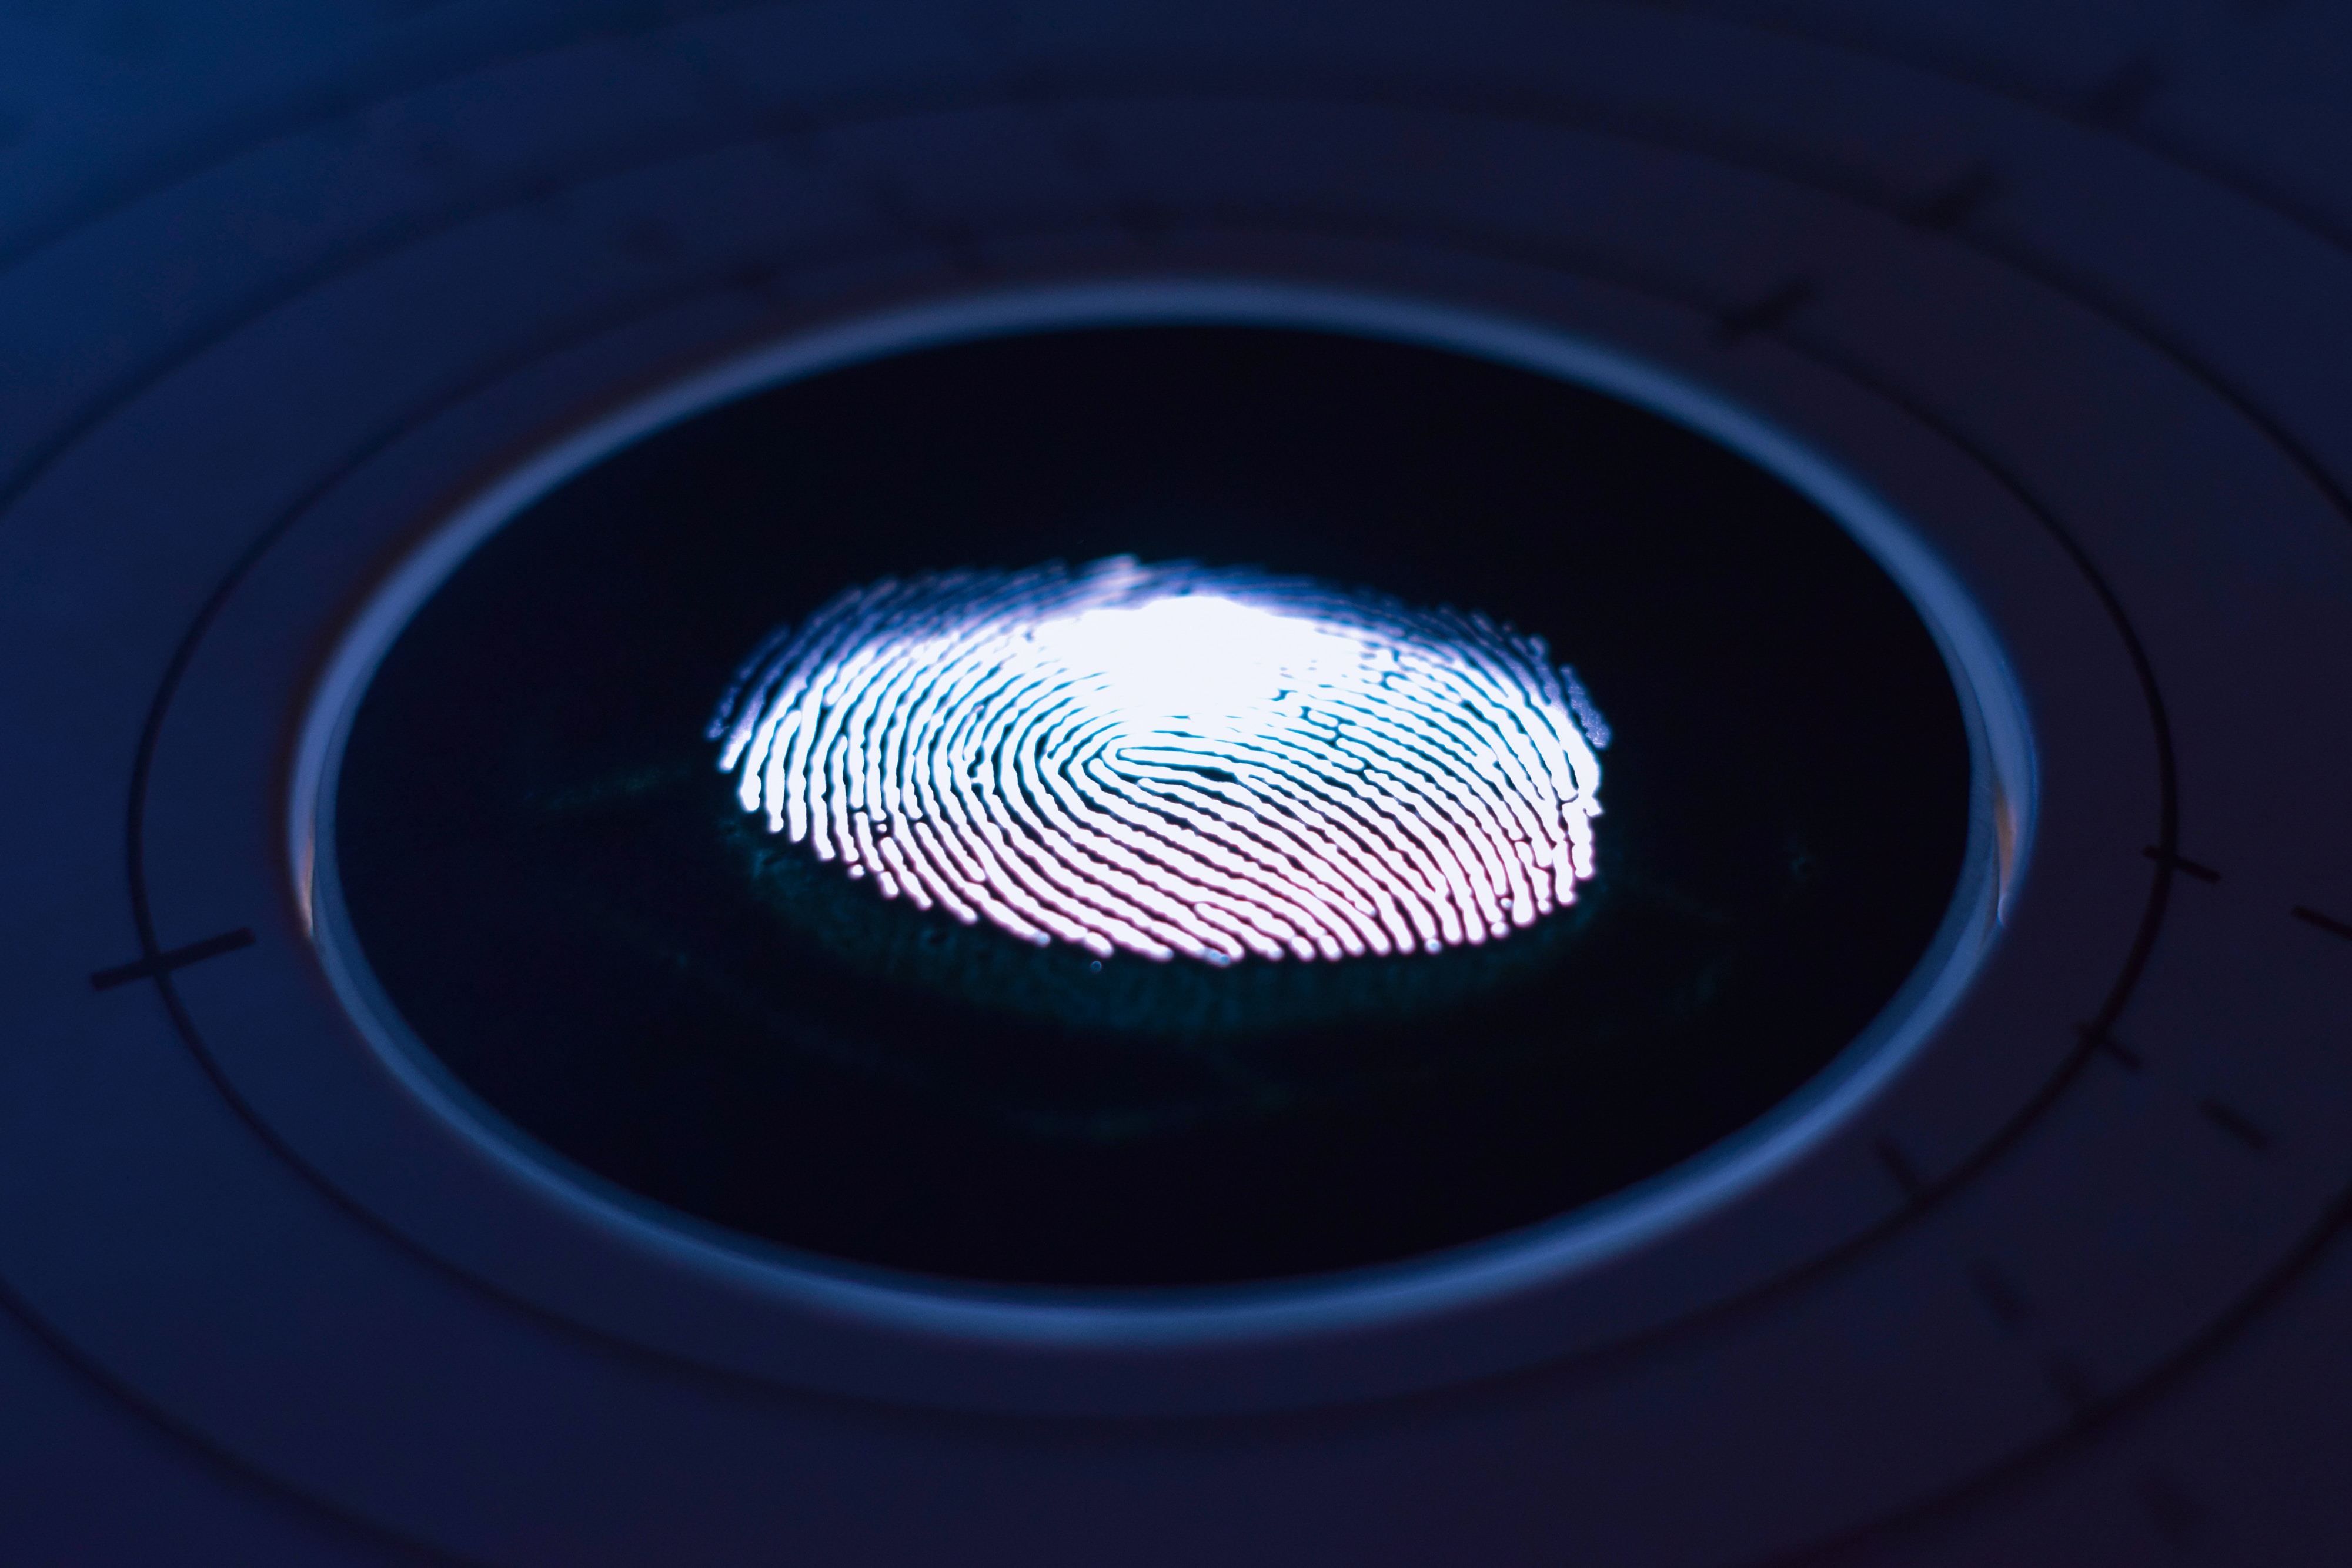 Fingerprint for TIE renewal